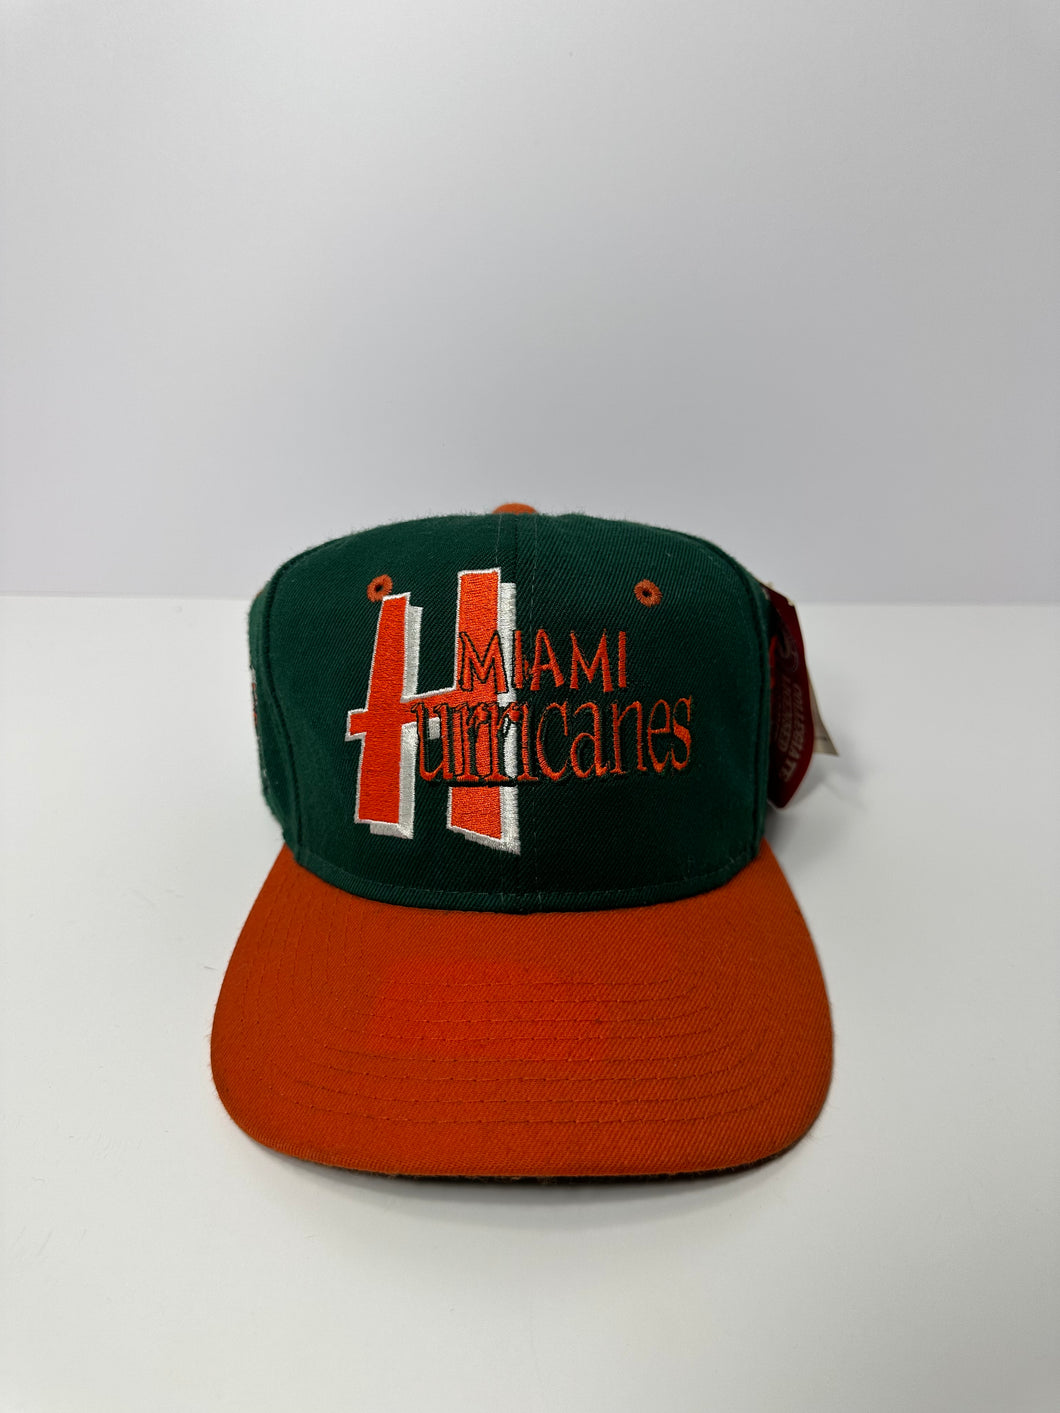 Vintage Miami Hurricanes The U Big East 1990s Strapback Hat